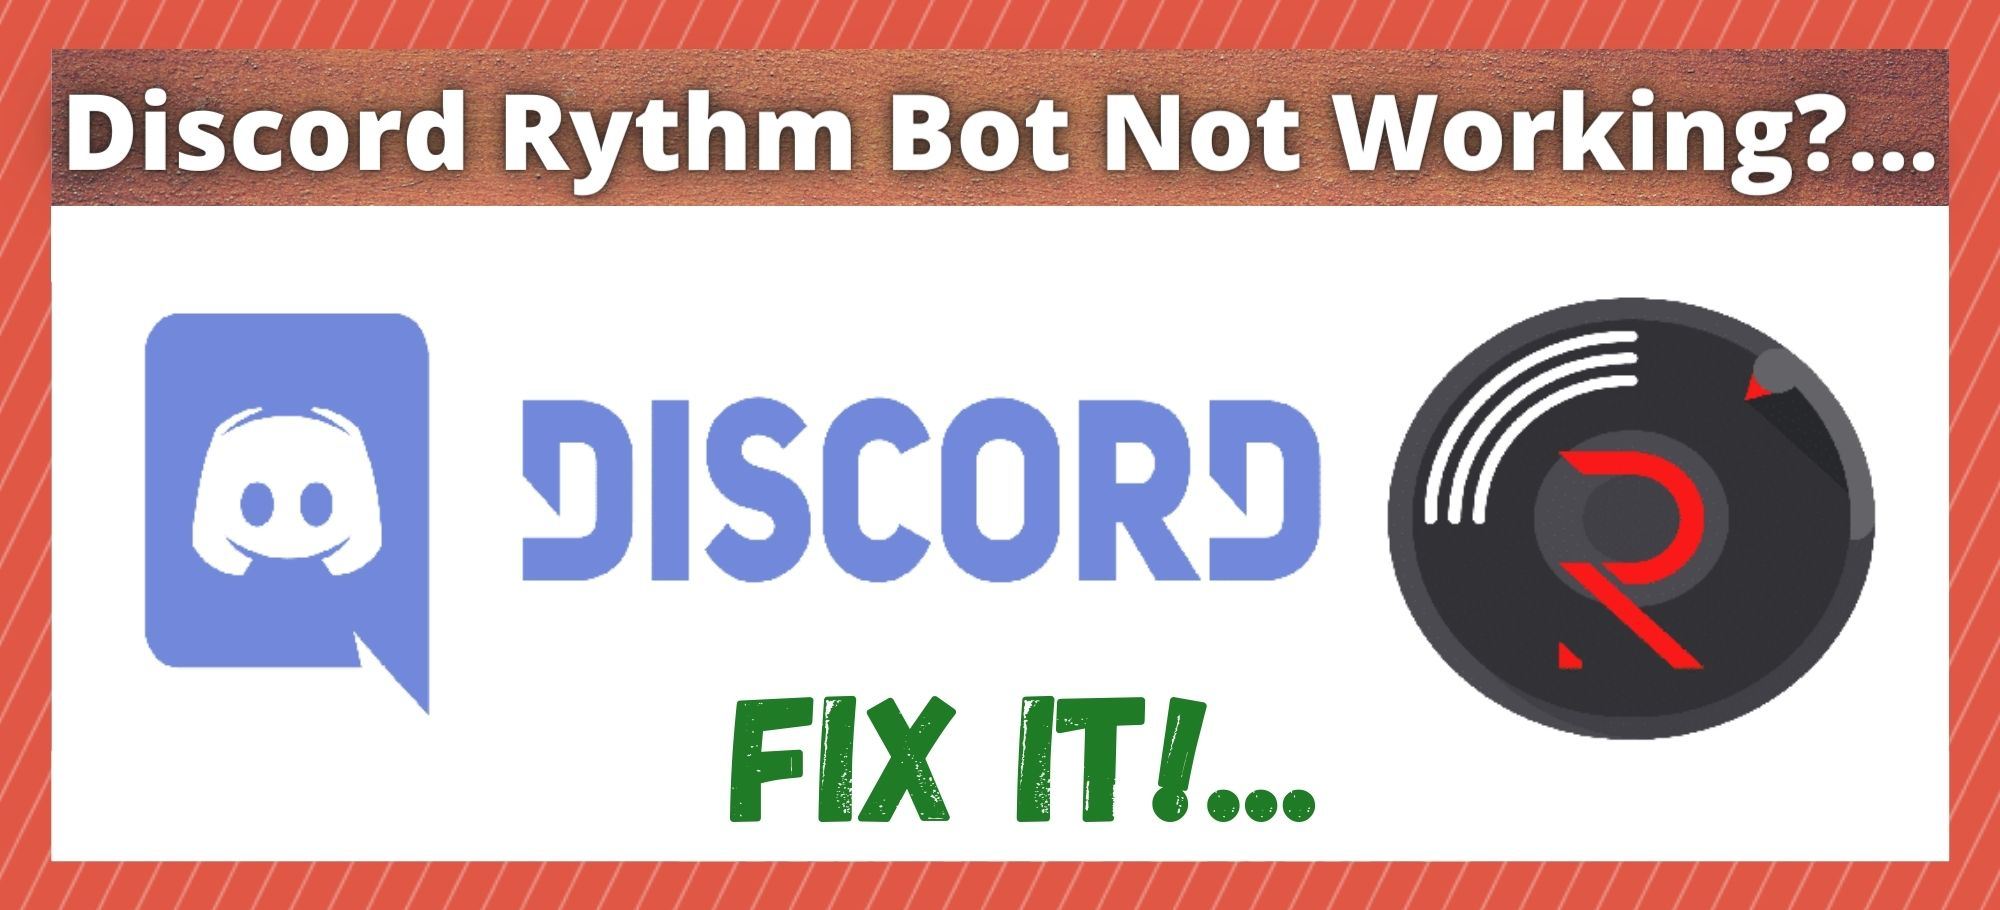 Rythm bot